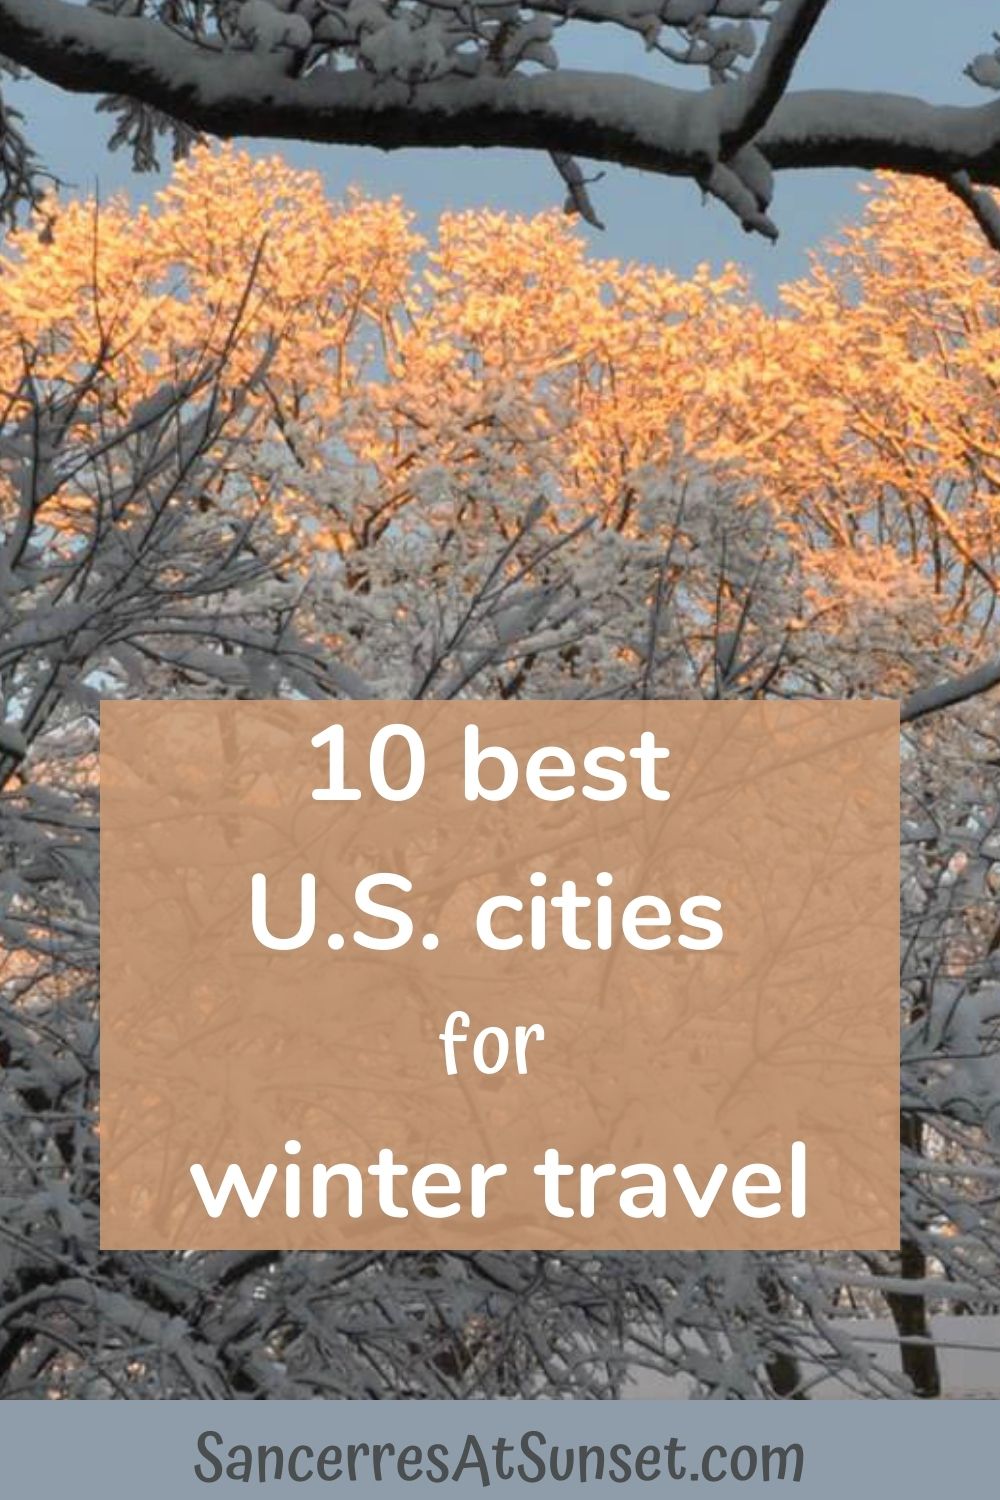 10 Best U.S. Cities for Winter Travel